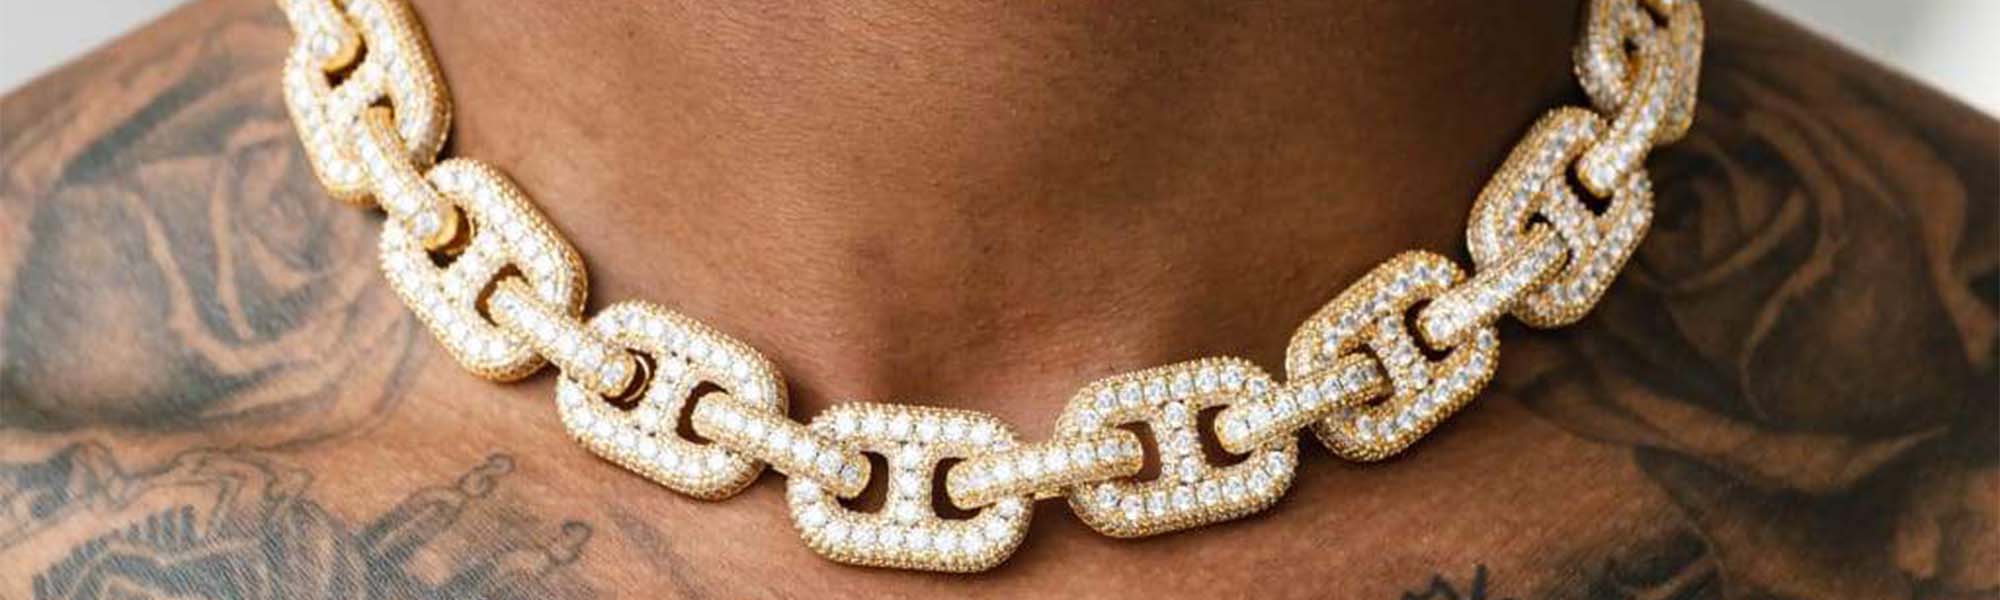 Tyga Flexes His Insane Jewelry Collection